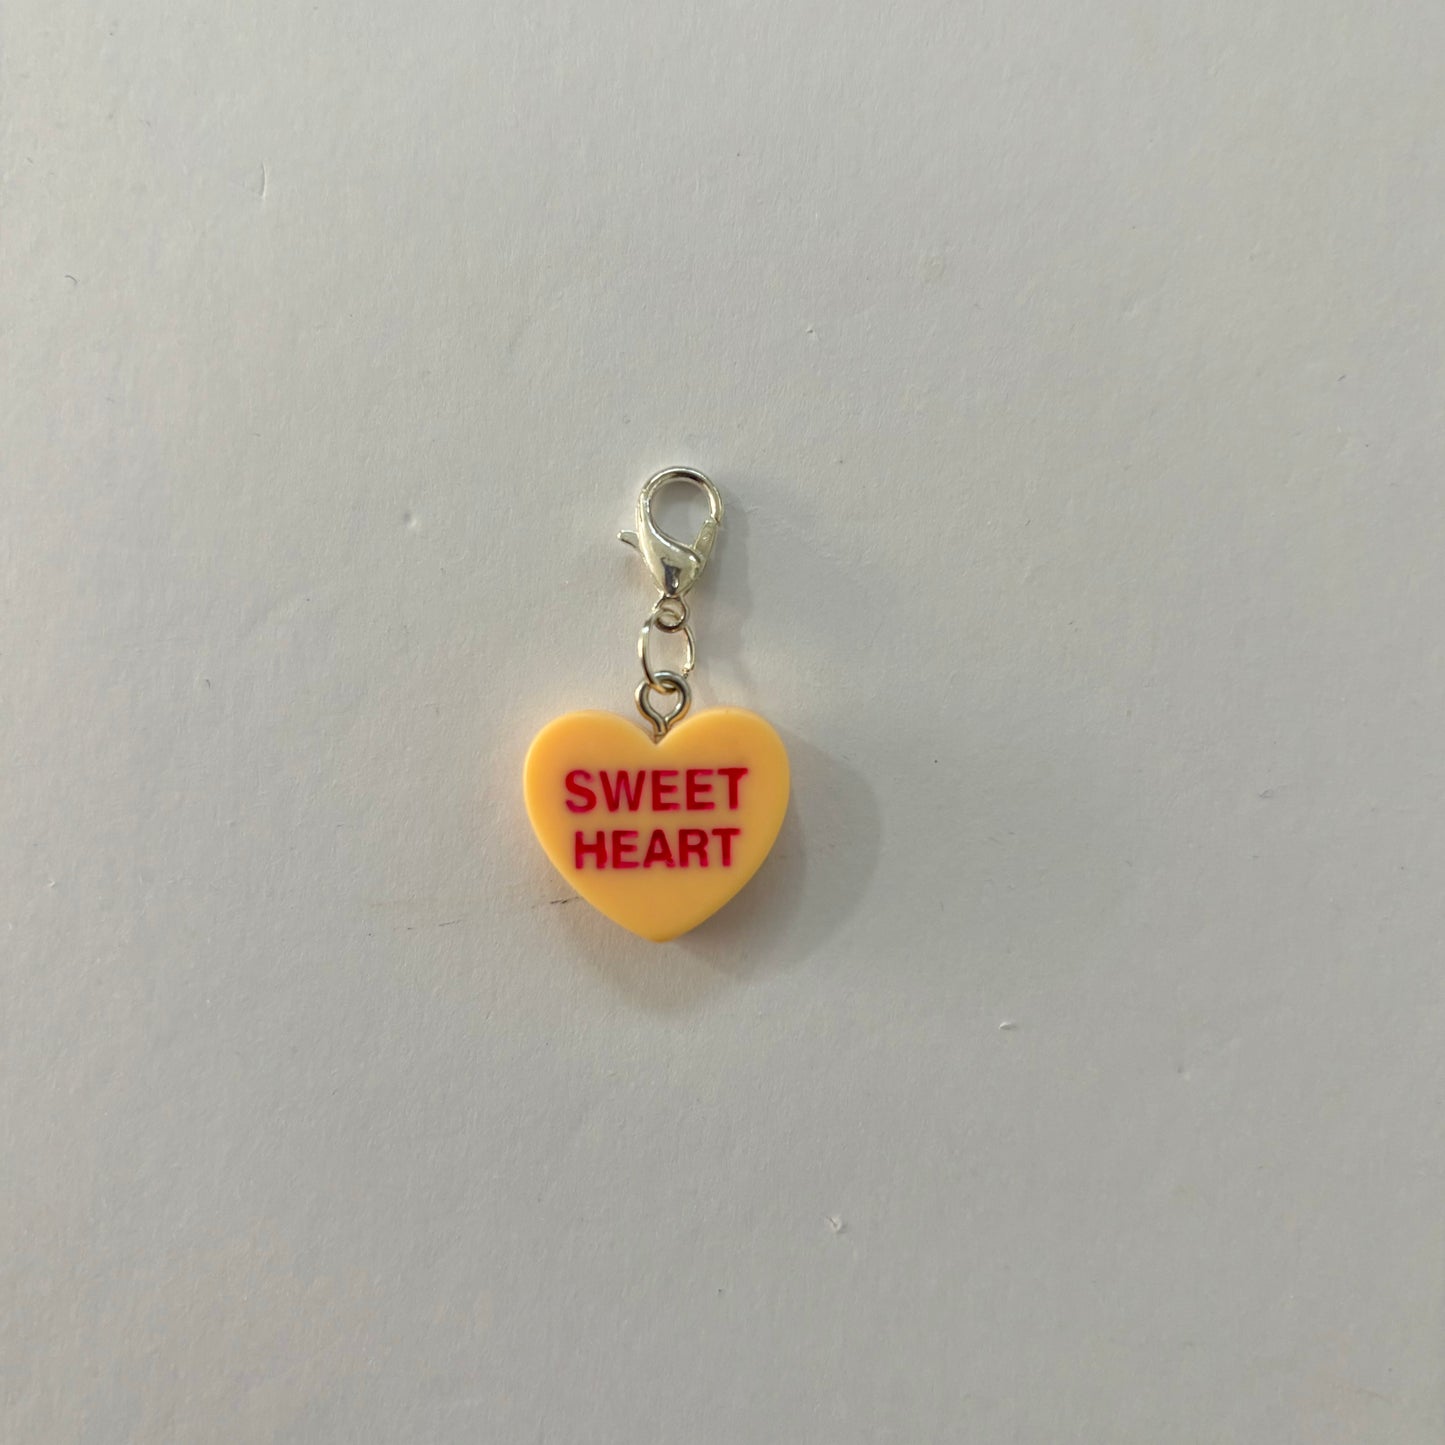 Sweet Heart - Orange Zipper Charm